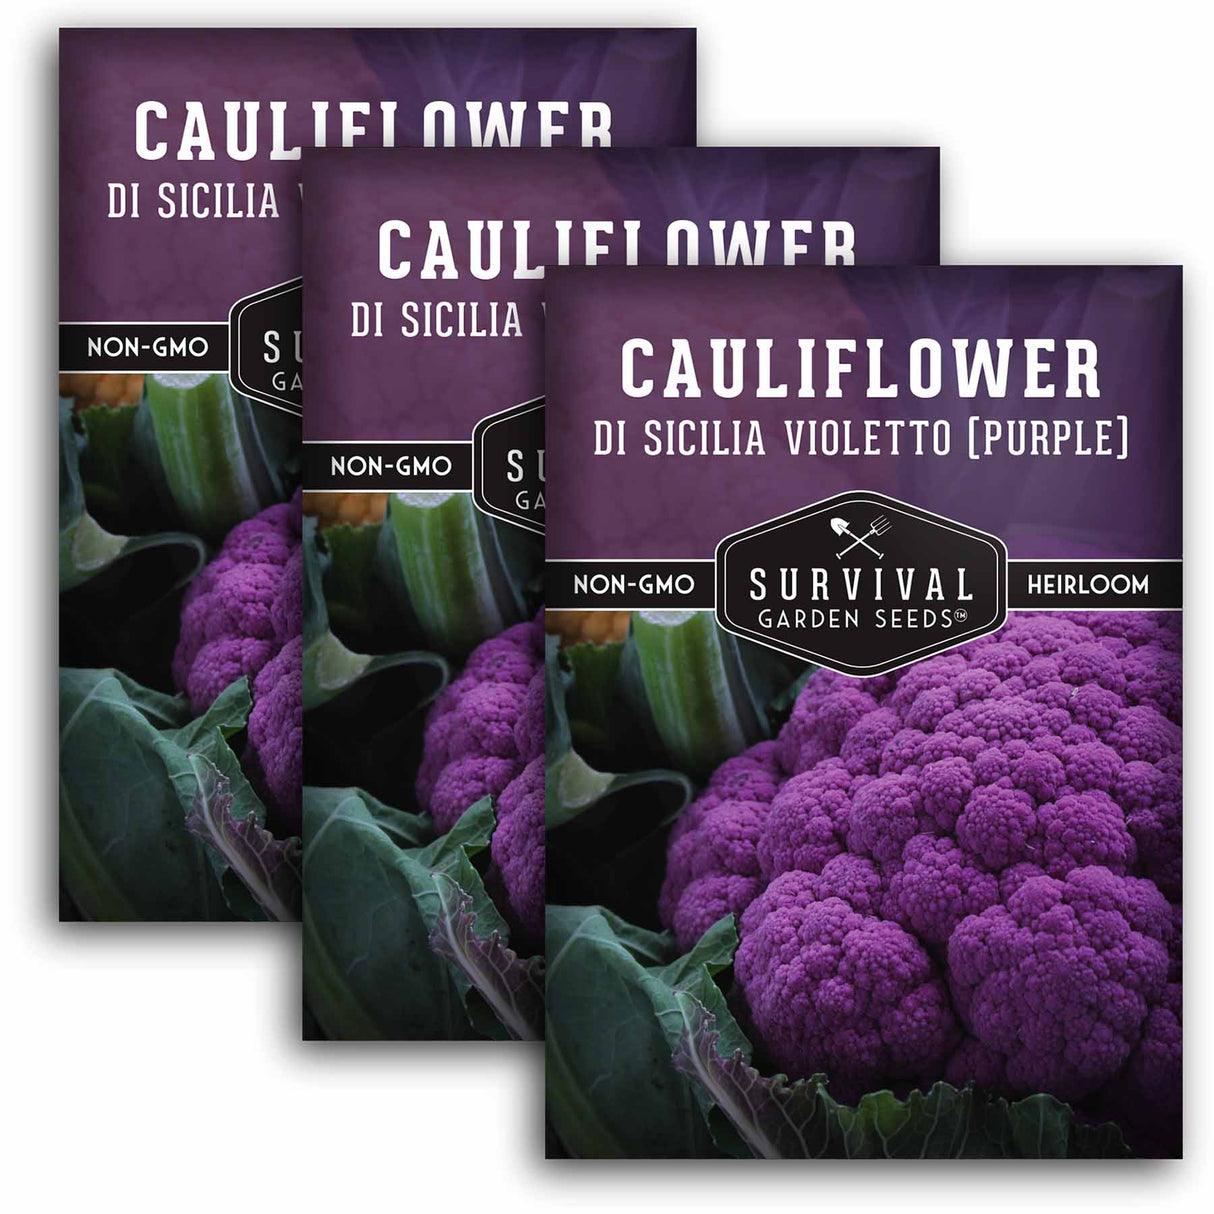 3 packets of Purple Cauliflower seeds